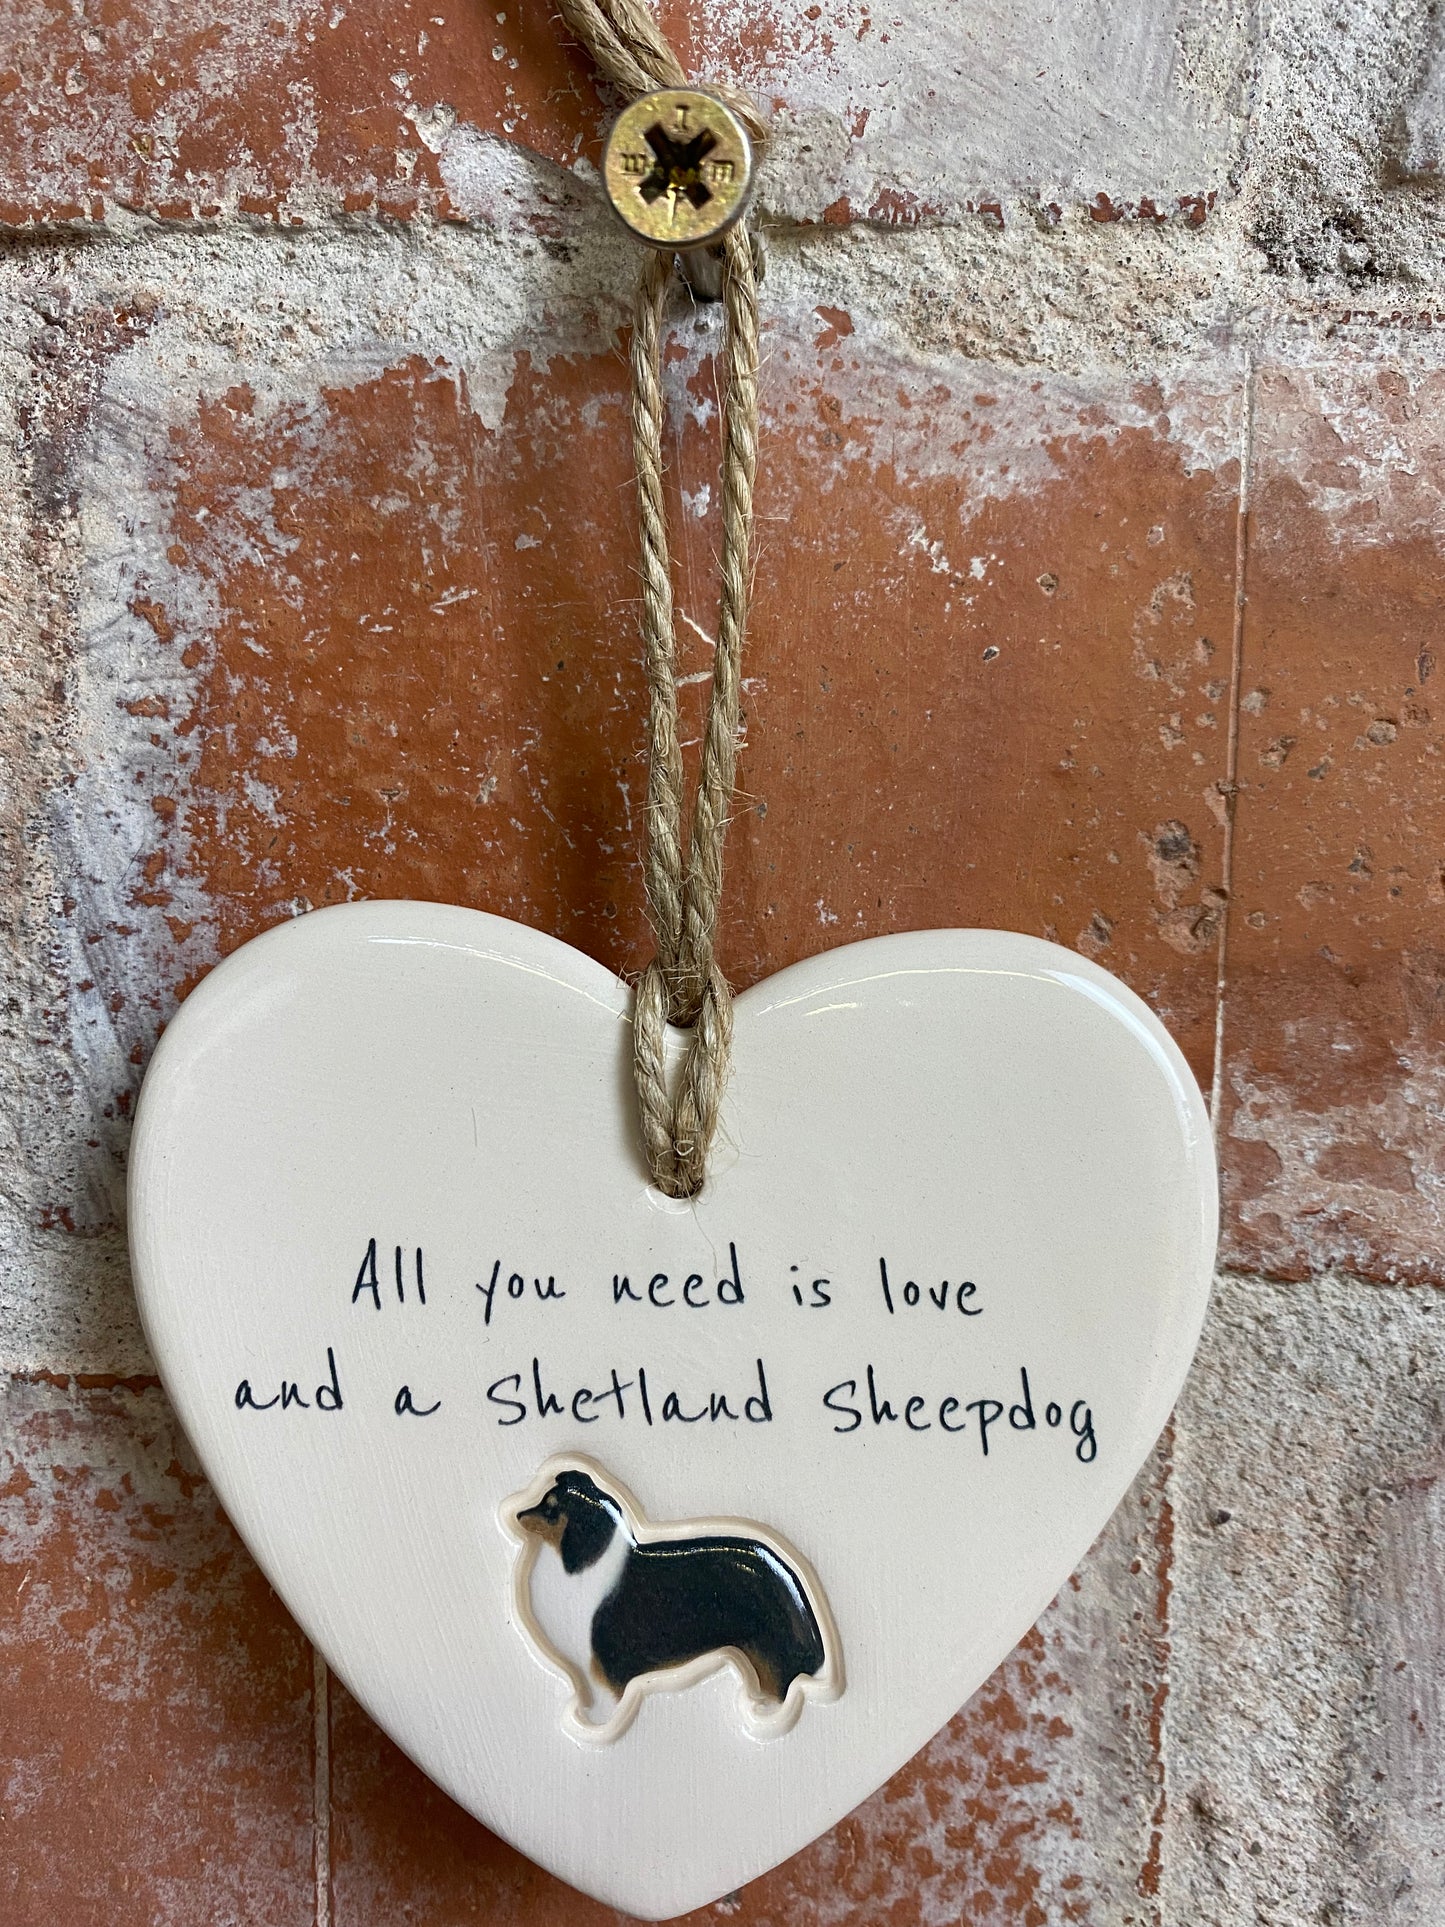 Shetland Sheepdog ceramic heart